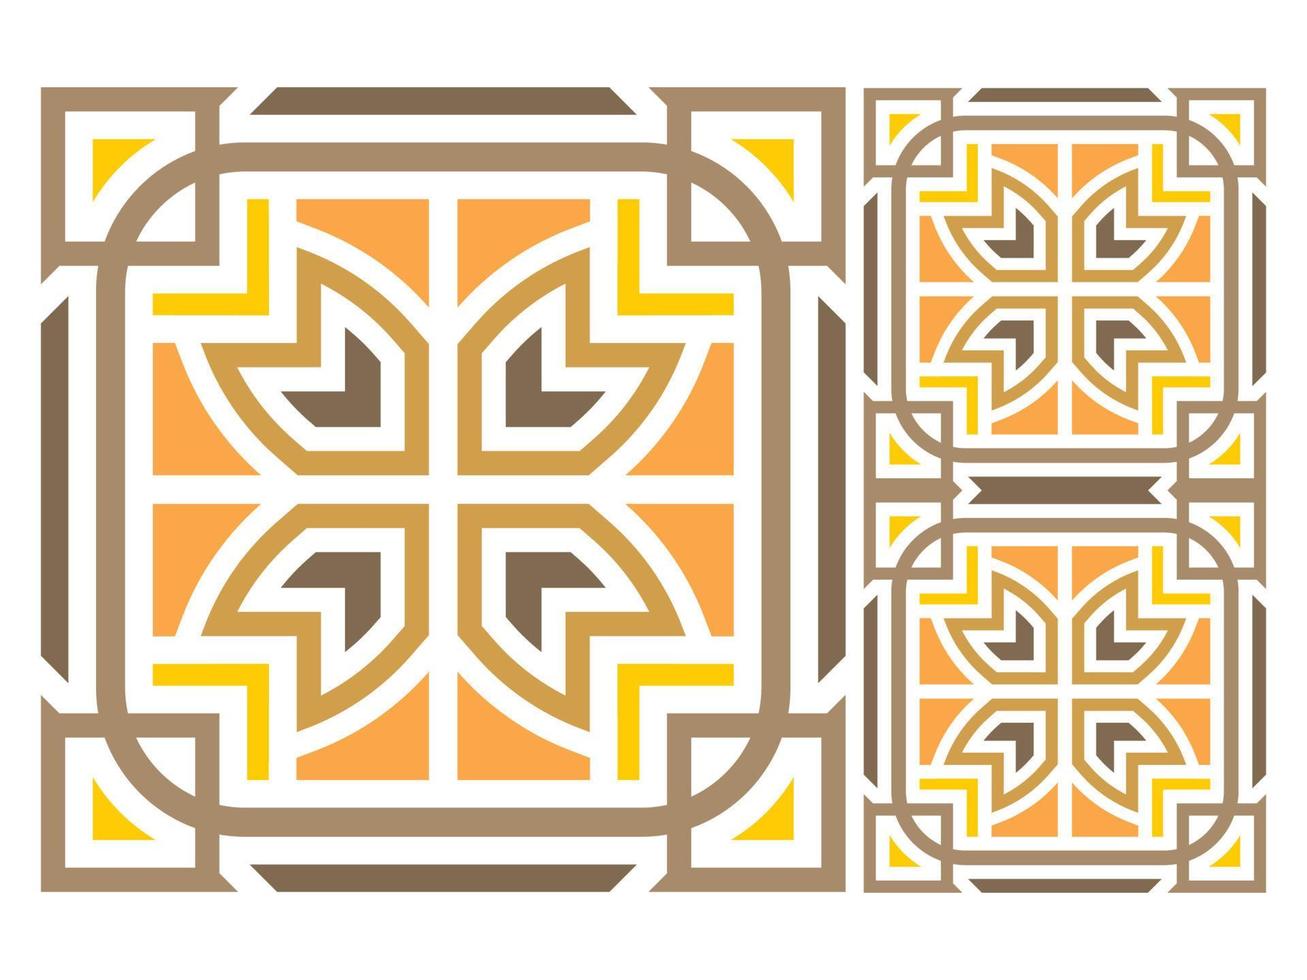 sömlösa mönster design kakel mosaik vektor gratis